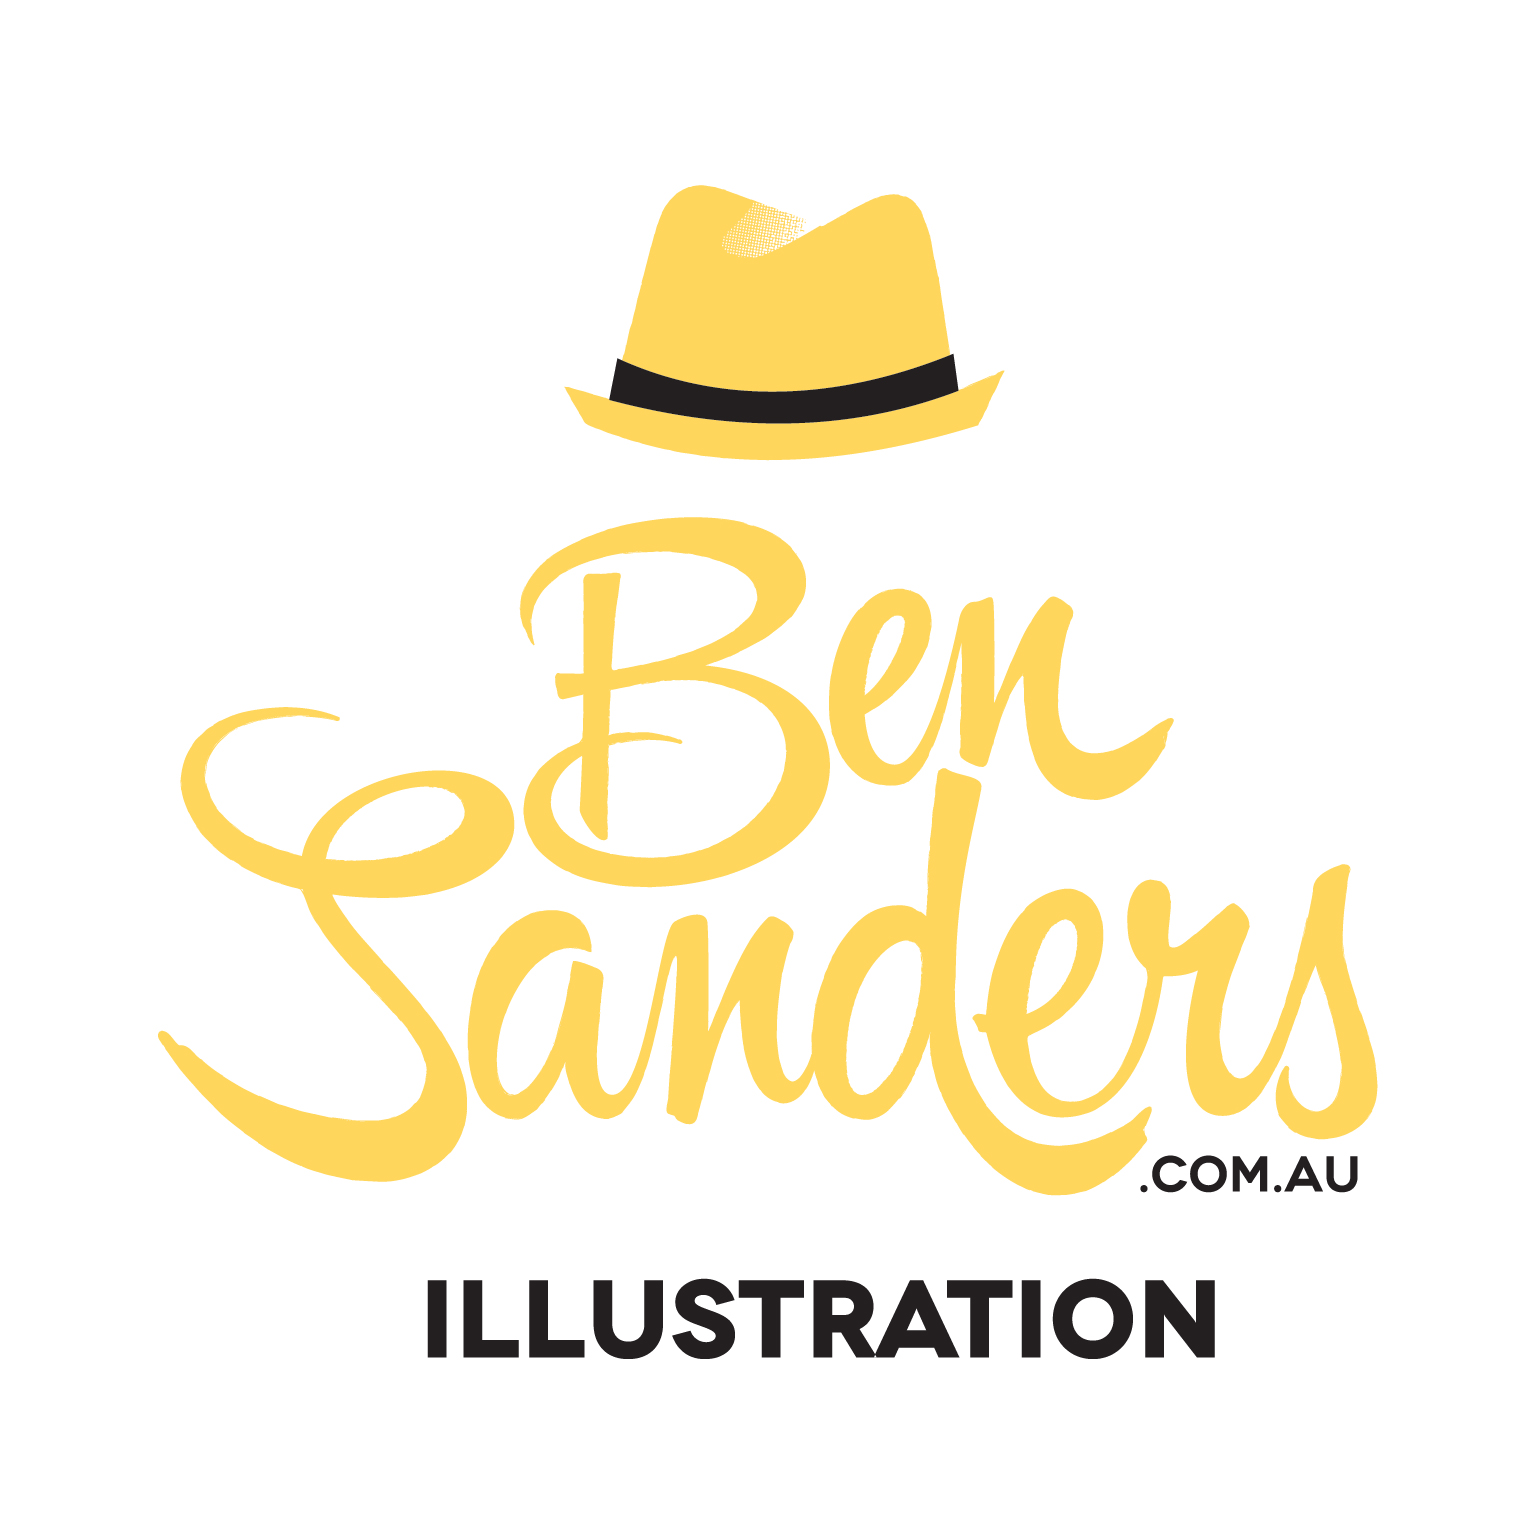 Ben Sanders company logo